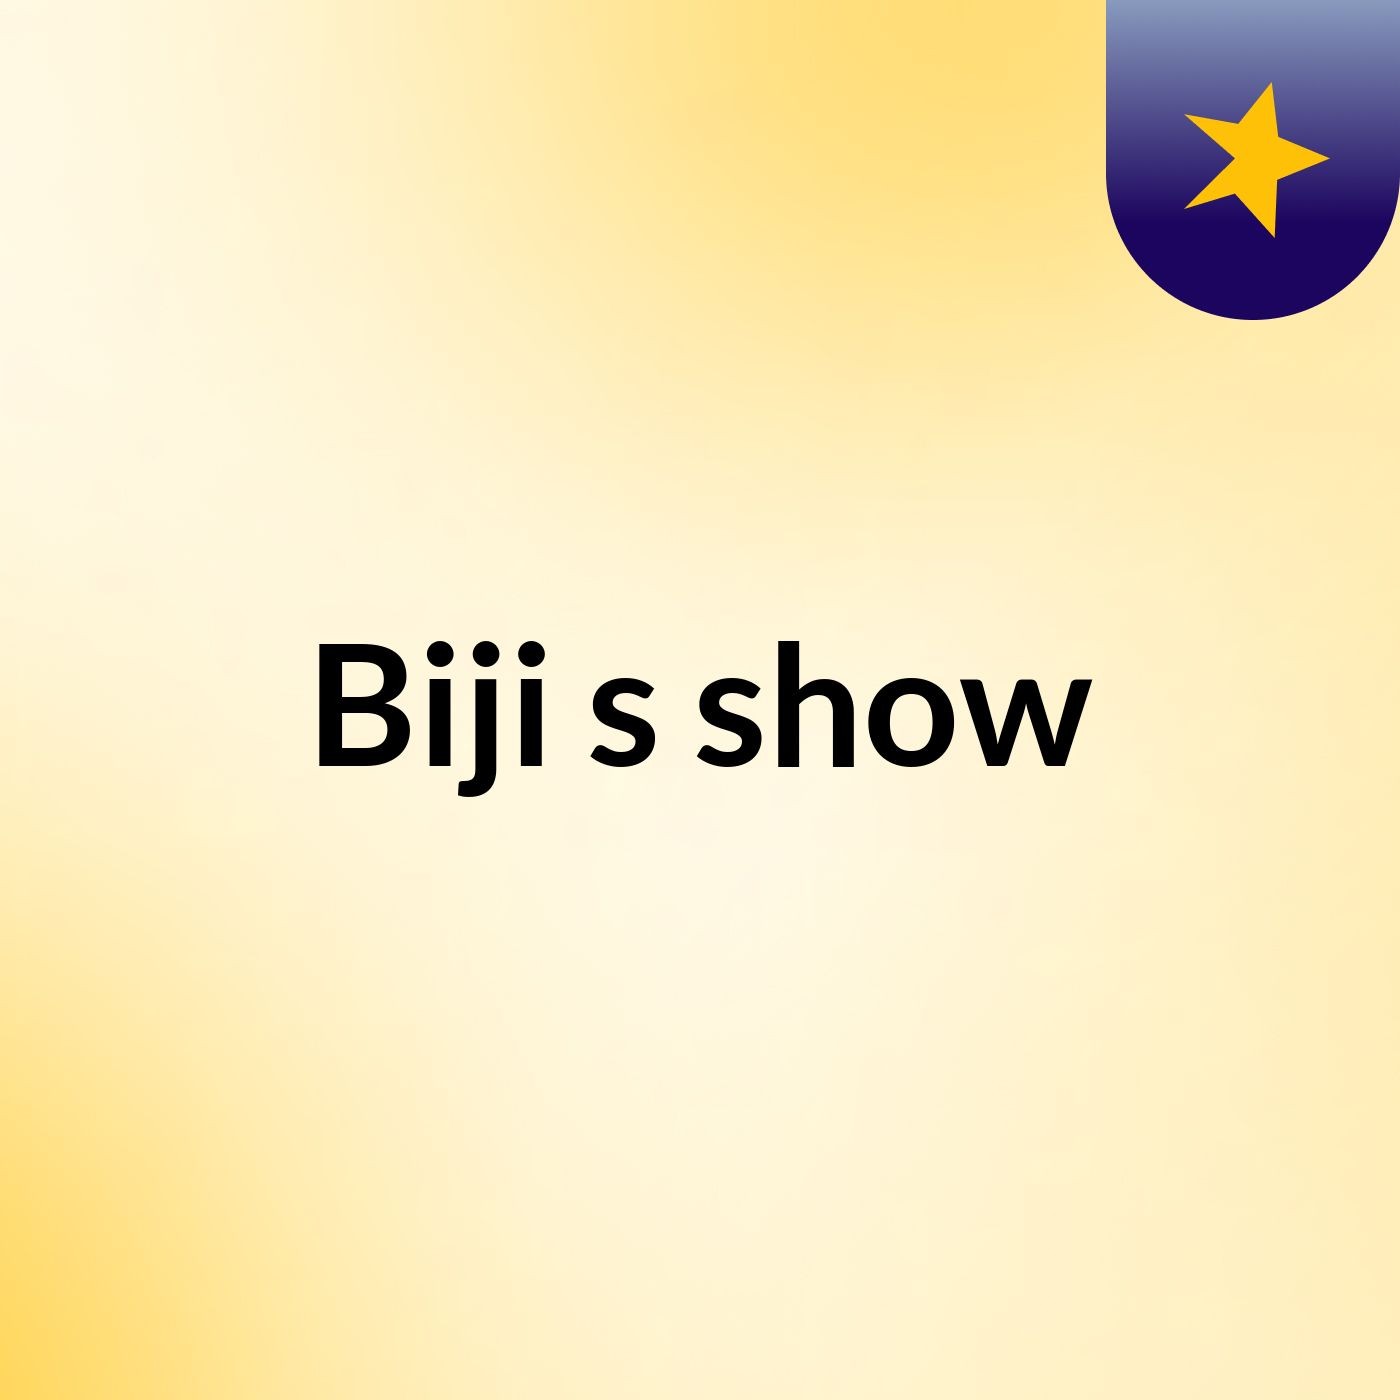 Biji's show